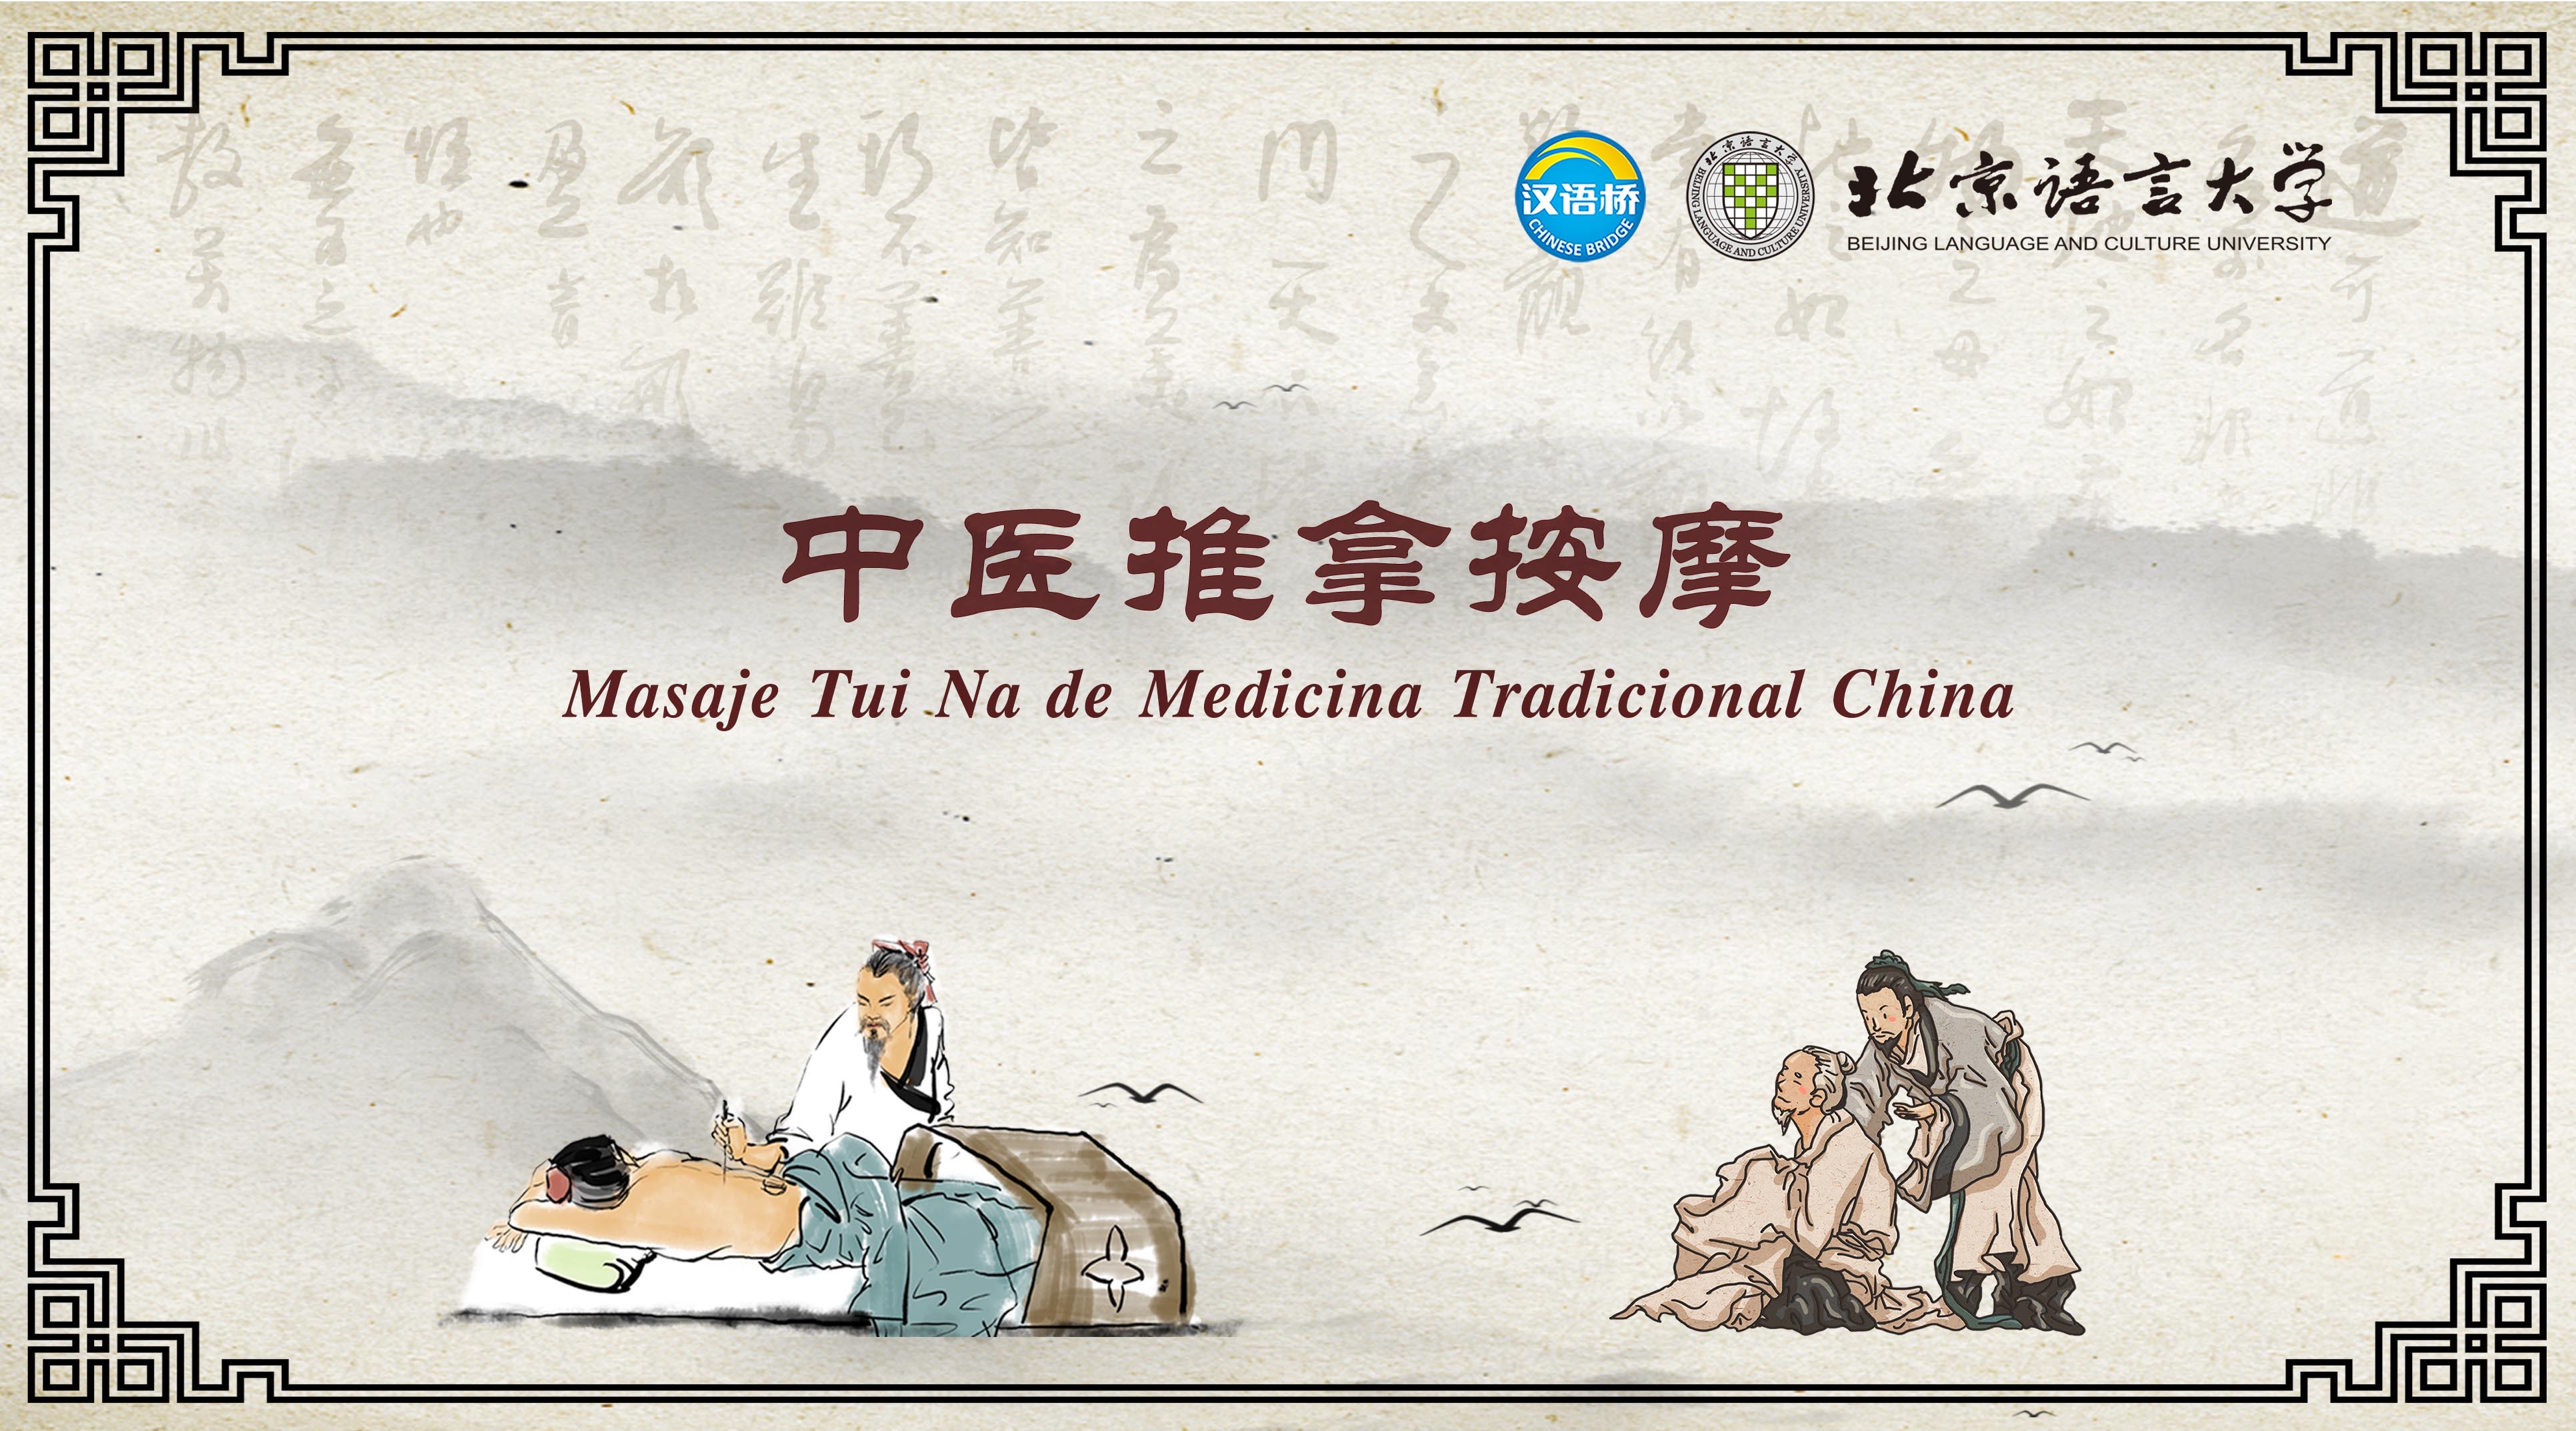 Masaje Tui Na de Medicina Tradicional China